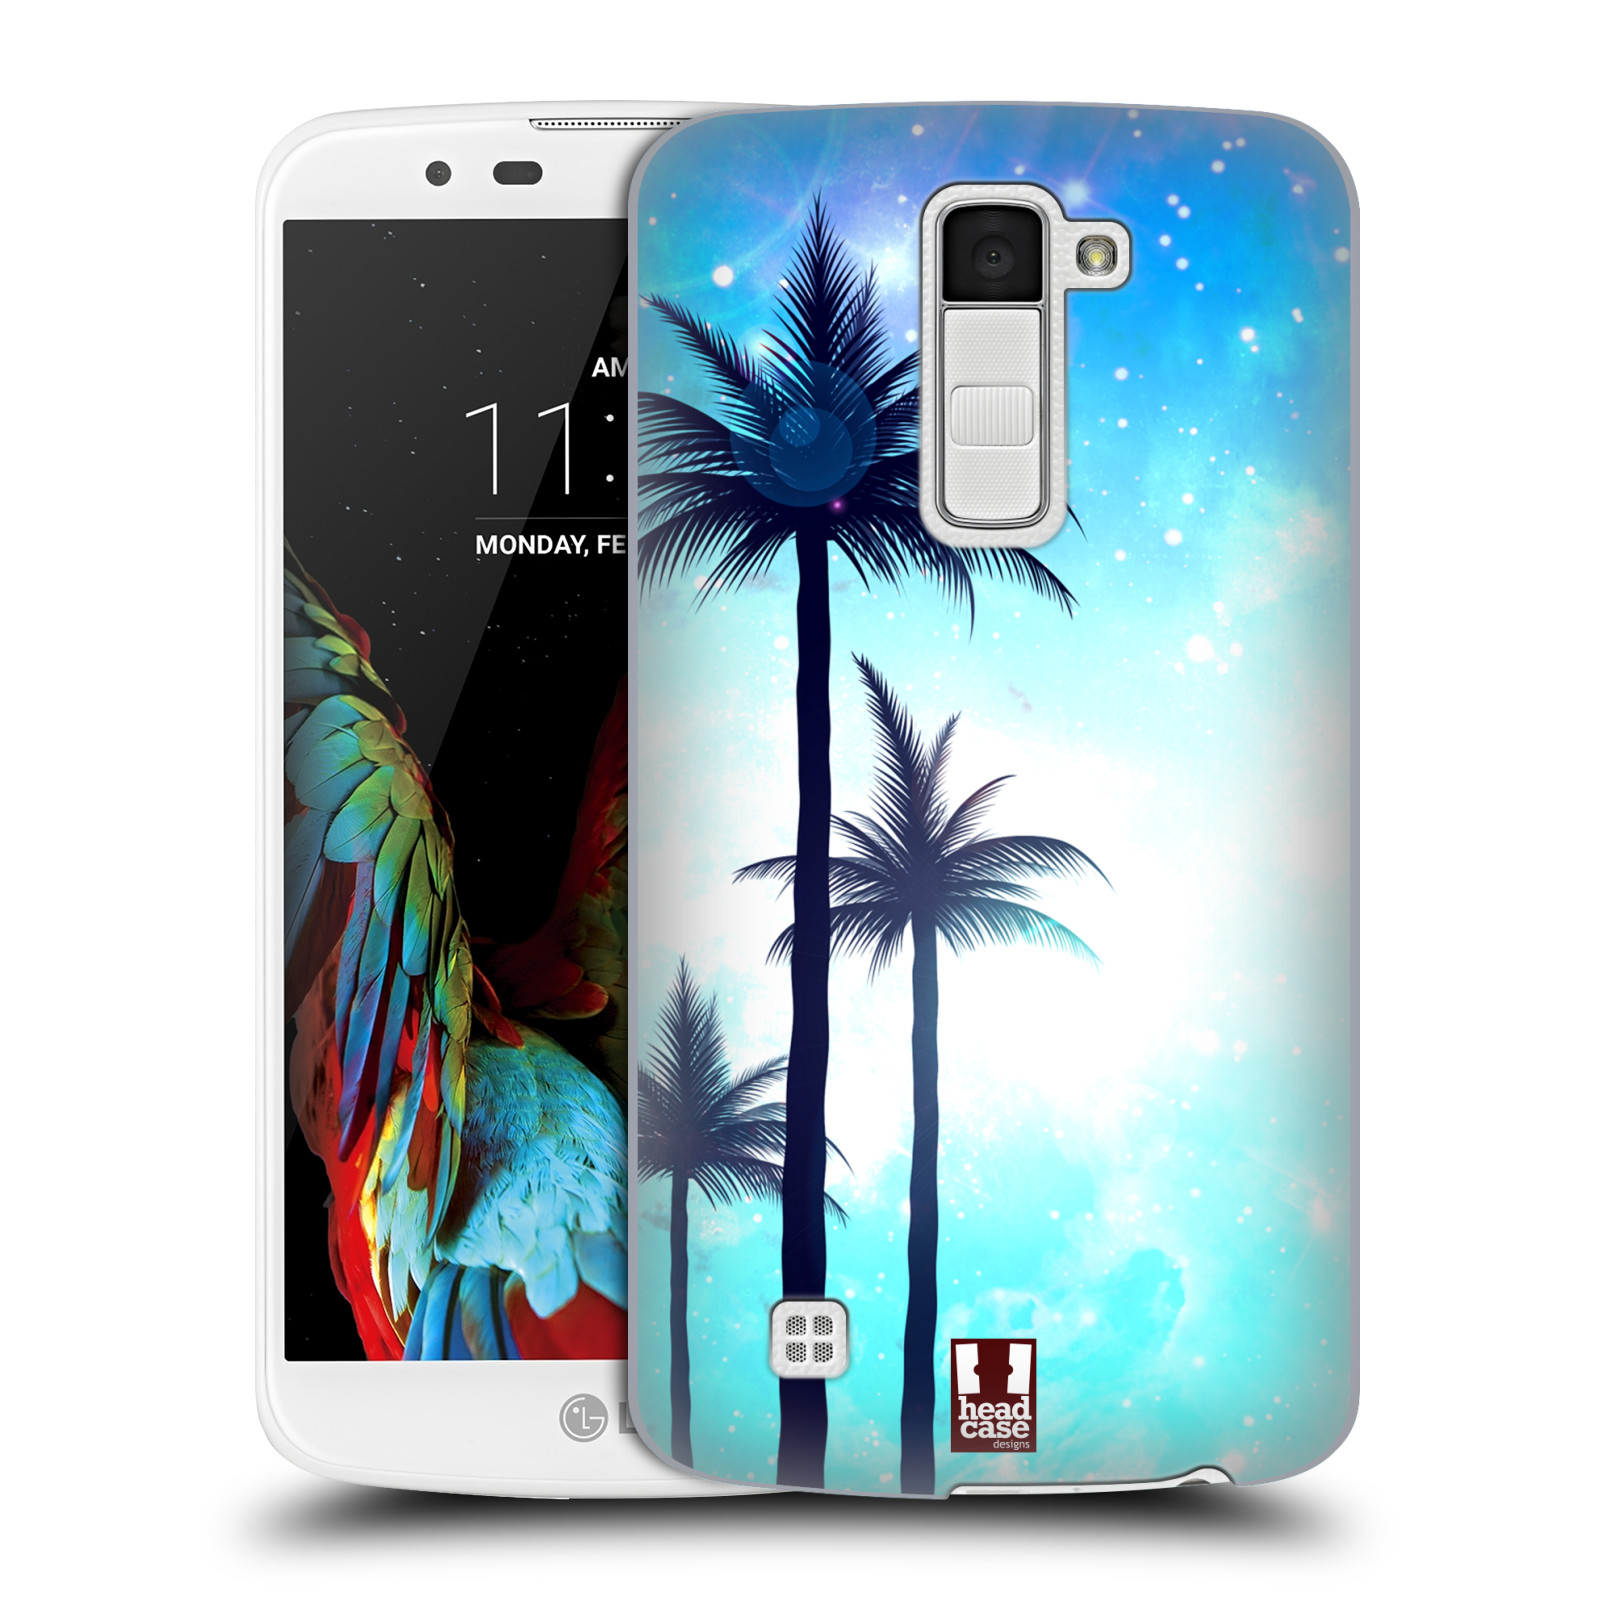 HEAD CASE plastový obal na mobil LG K10 vzor Kreslený motiv silueta moře a palmy MODRÁ